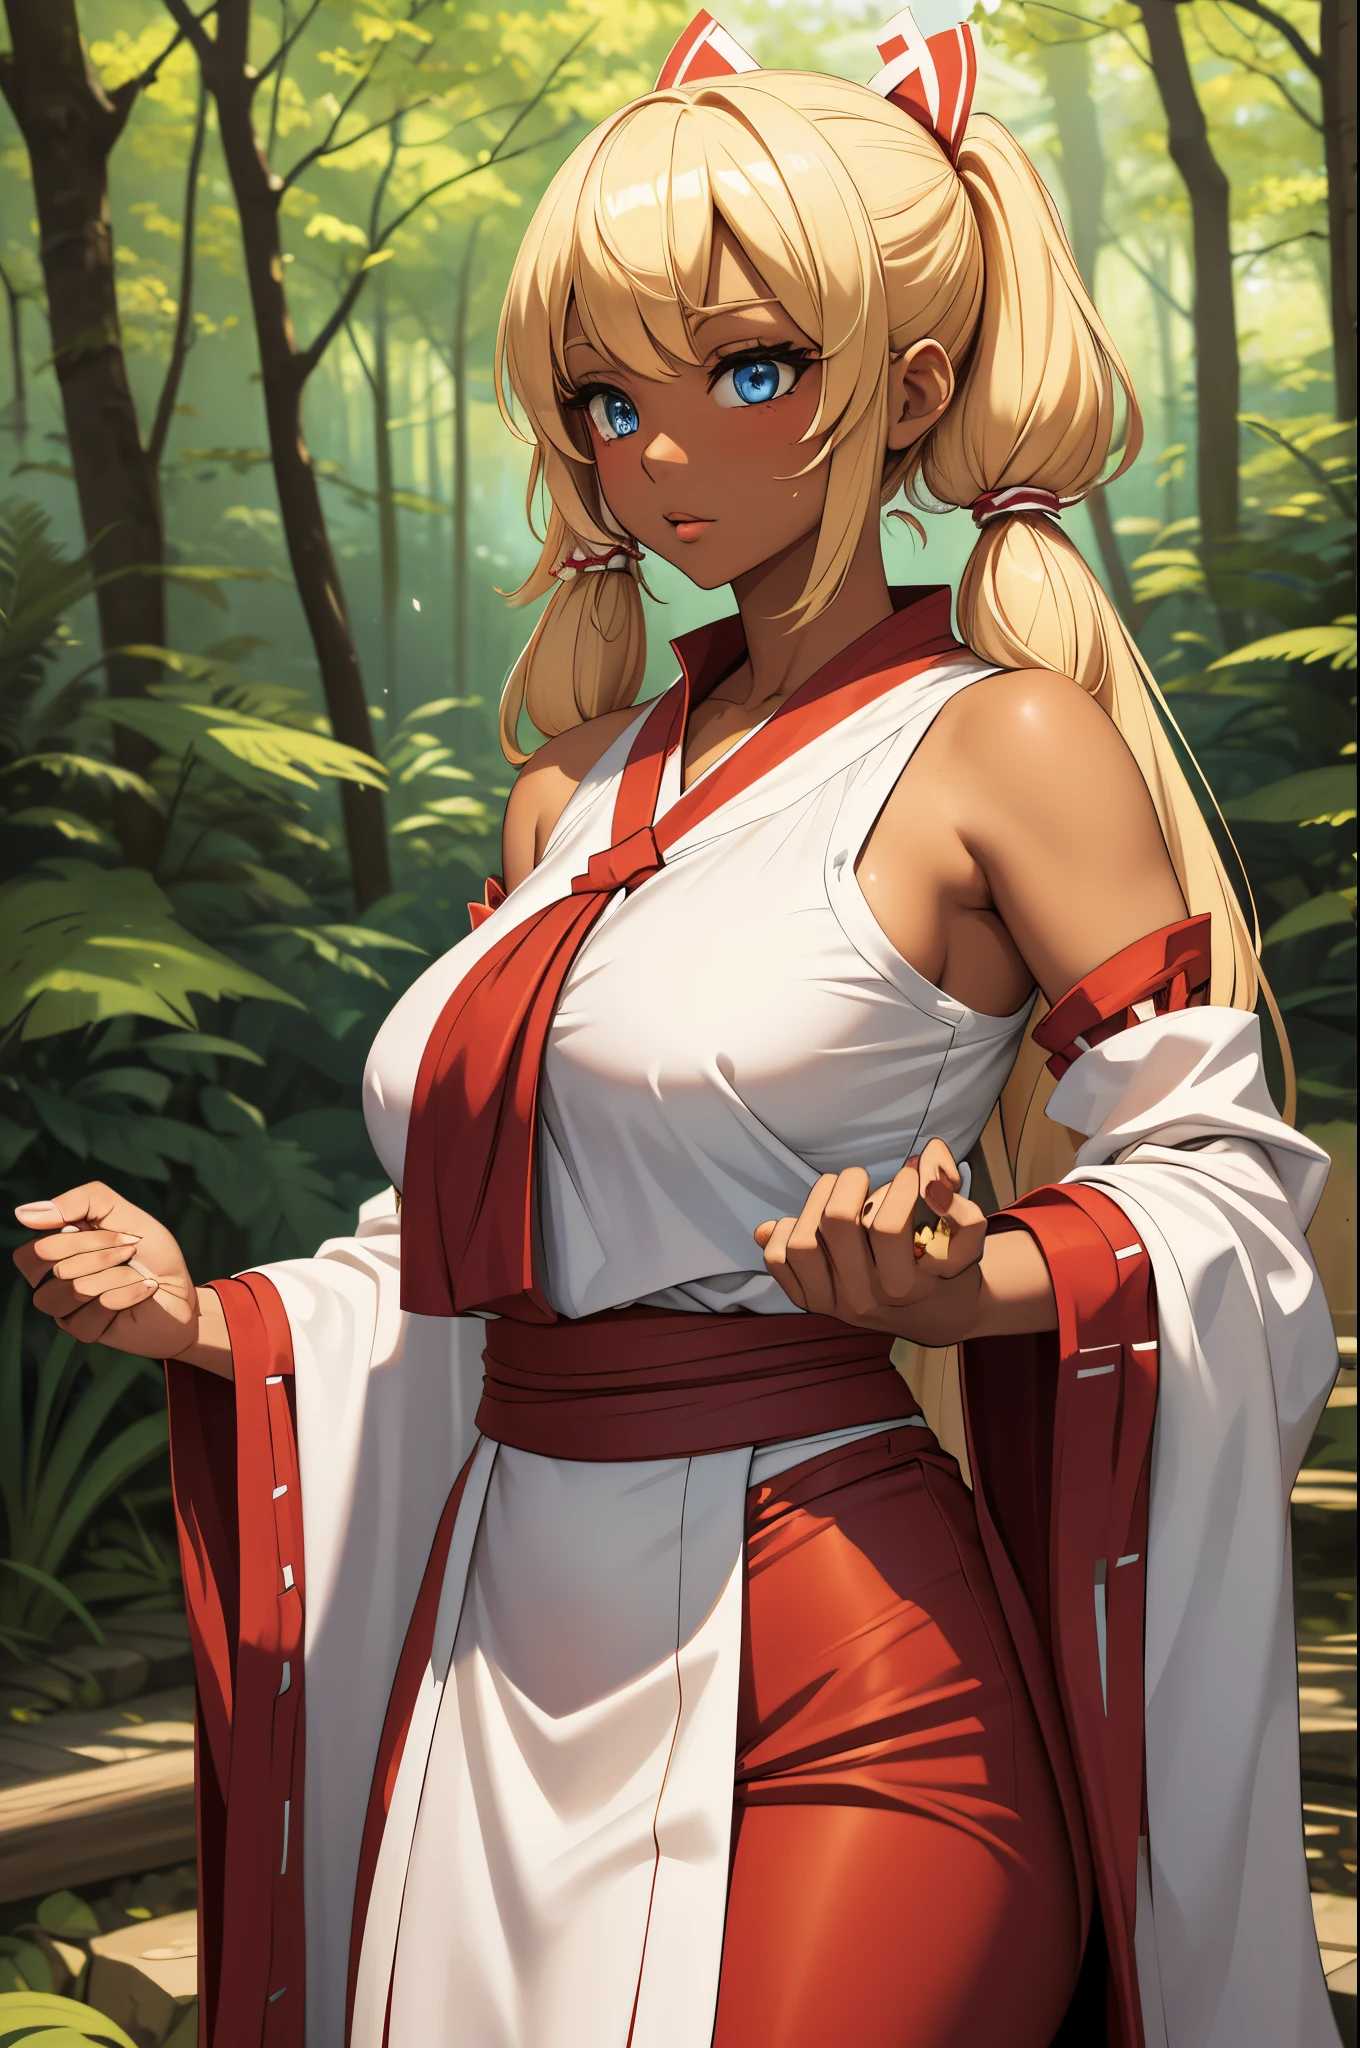 Female gyaru, twintails Blonde hair, Blue eyes, dark brown skin, large breasts, wearing a miko outfit like Reimu Hakurei in a forest